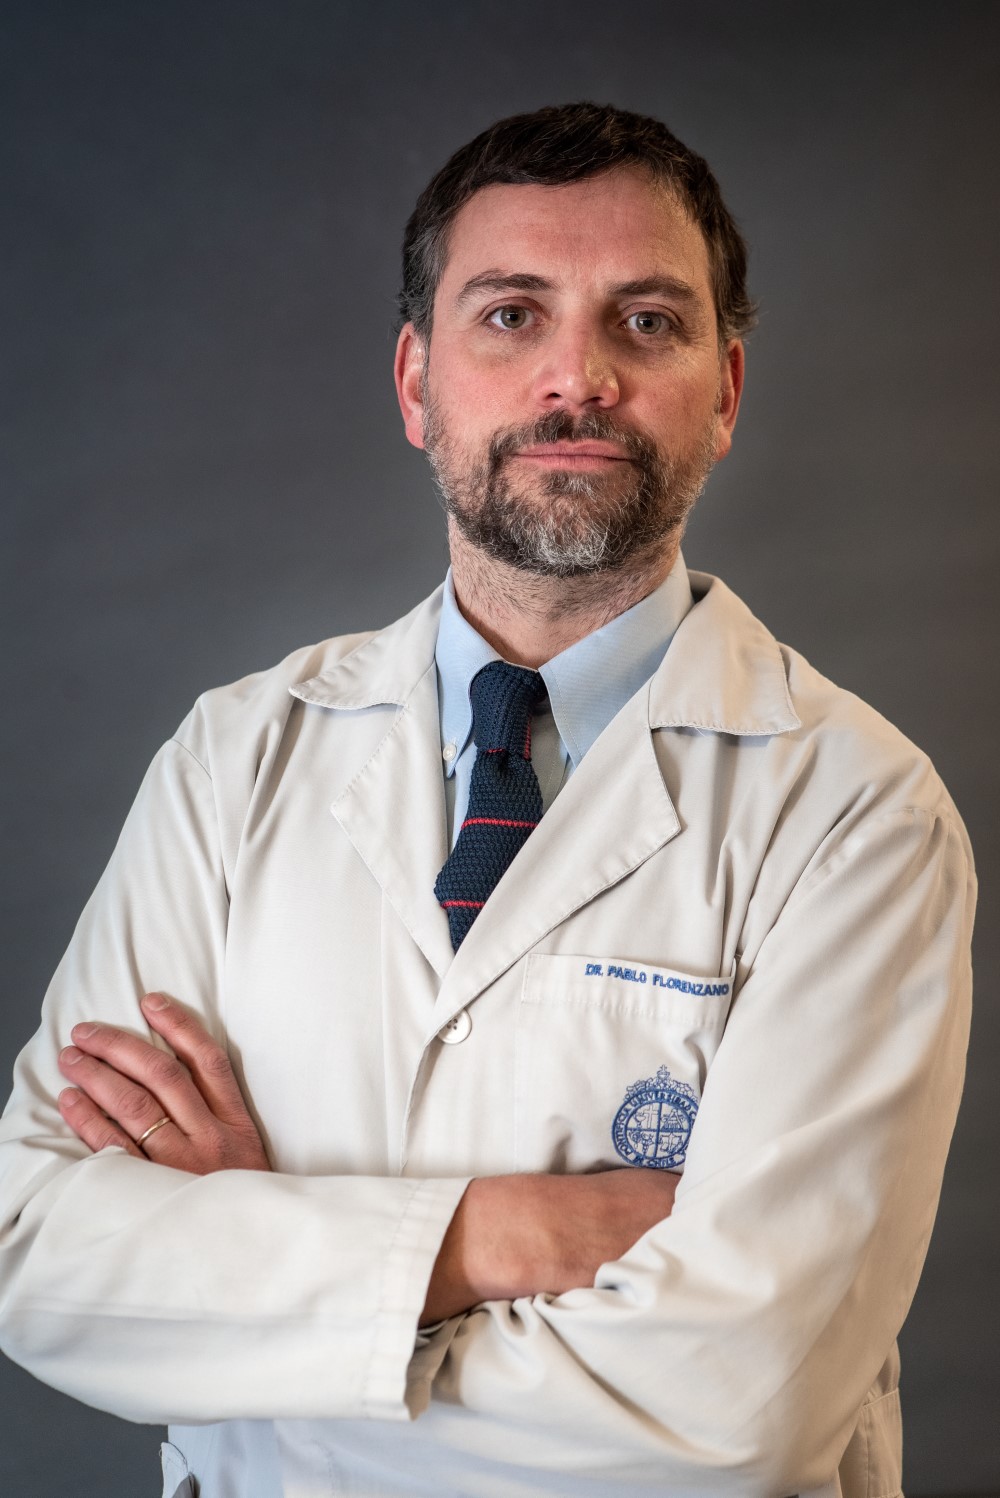 Dr. Pablo Florenzano